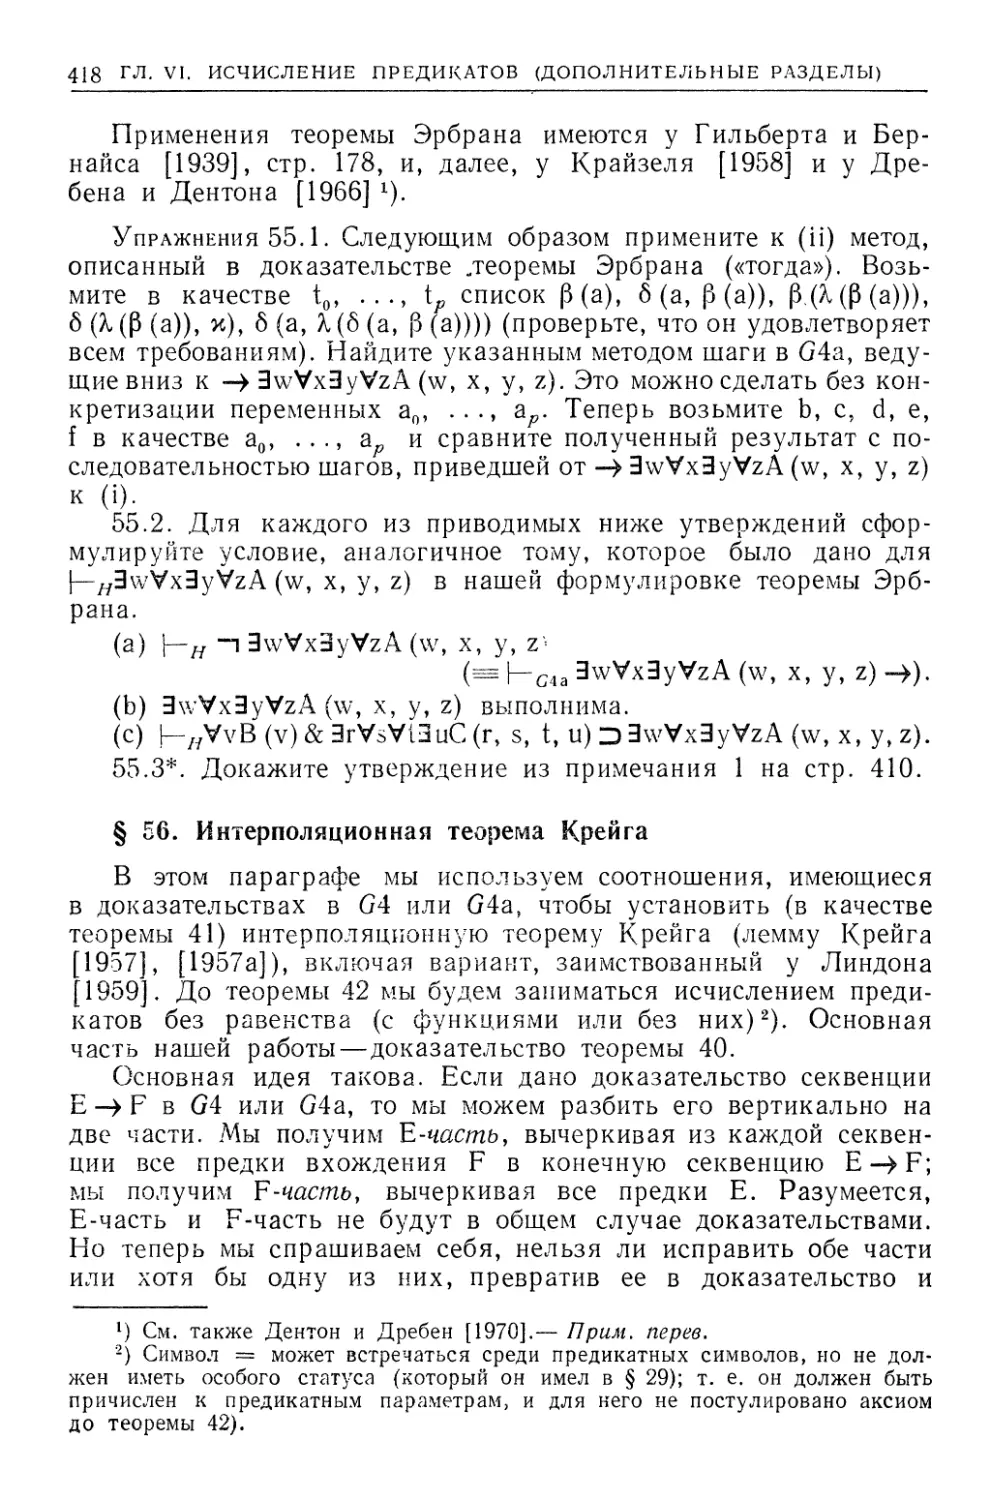 §56. Интерполяционная теорема Крейга